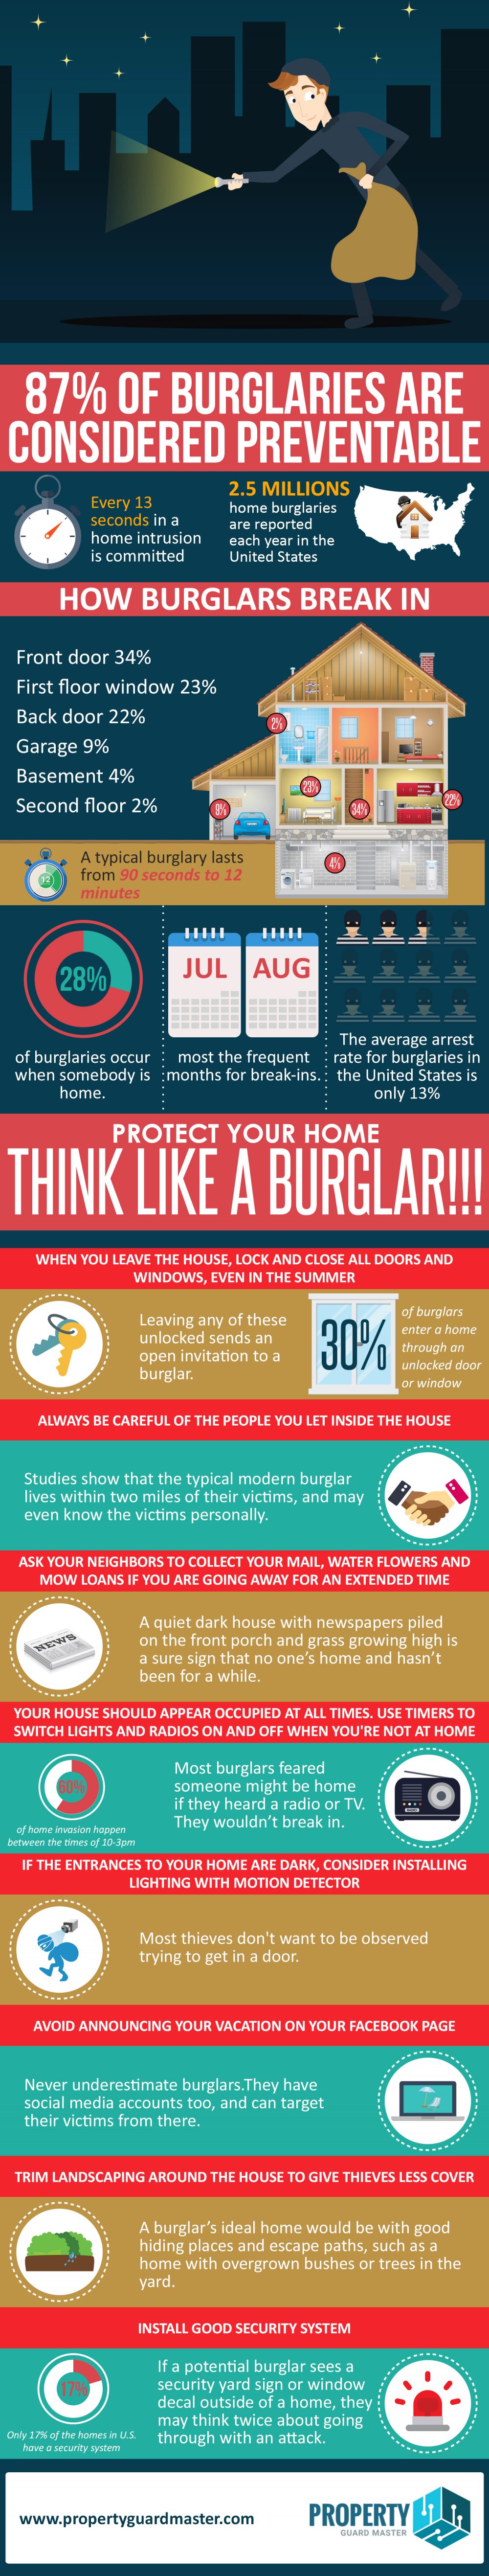 Protect Your Home: Think Like A Burglar